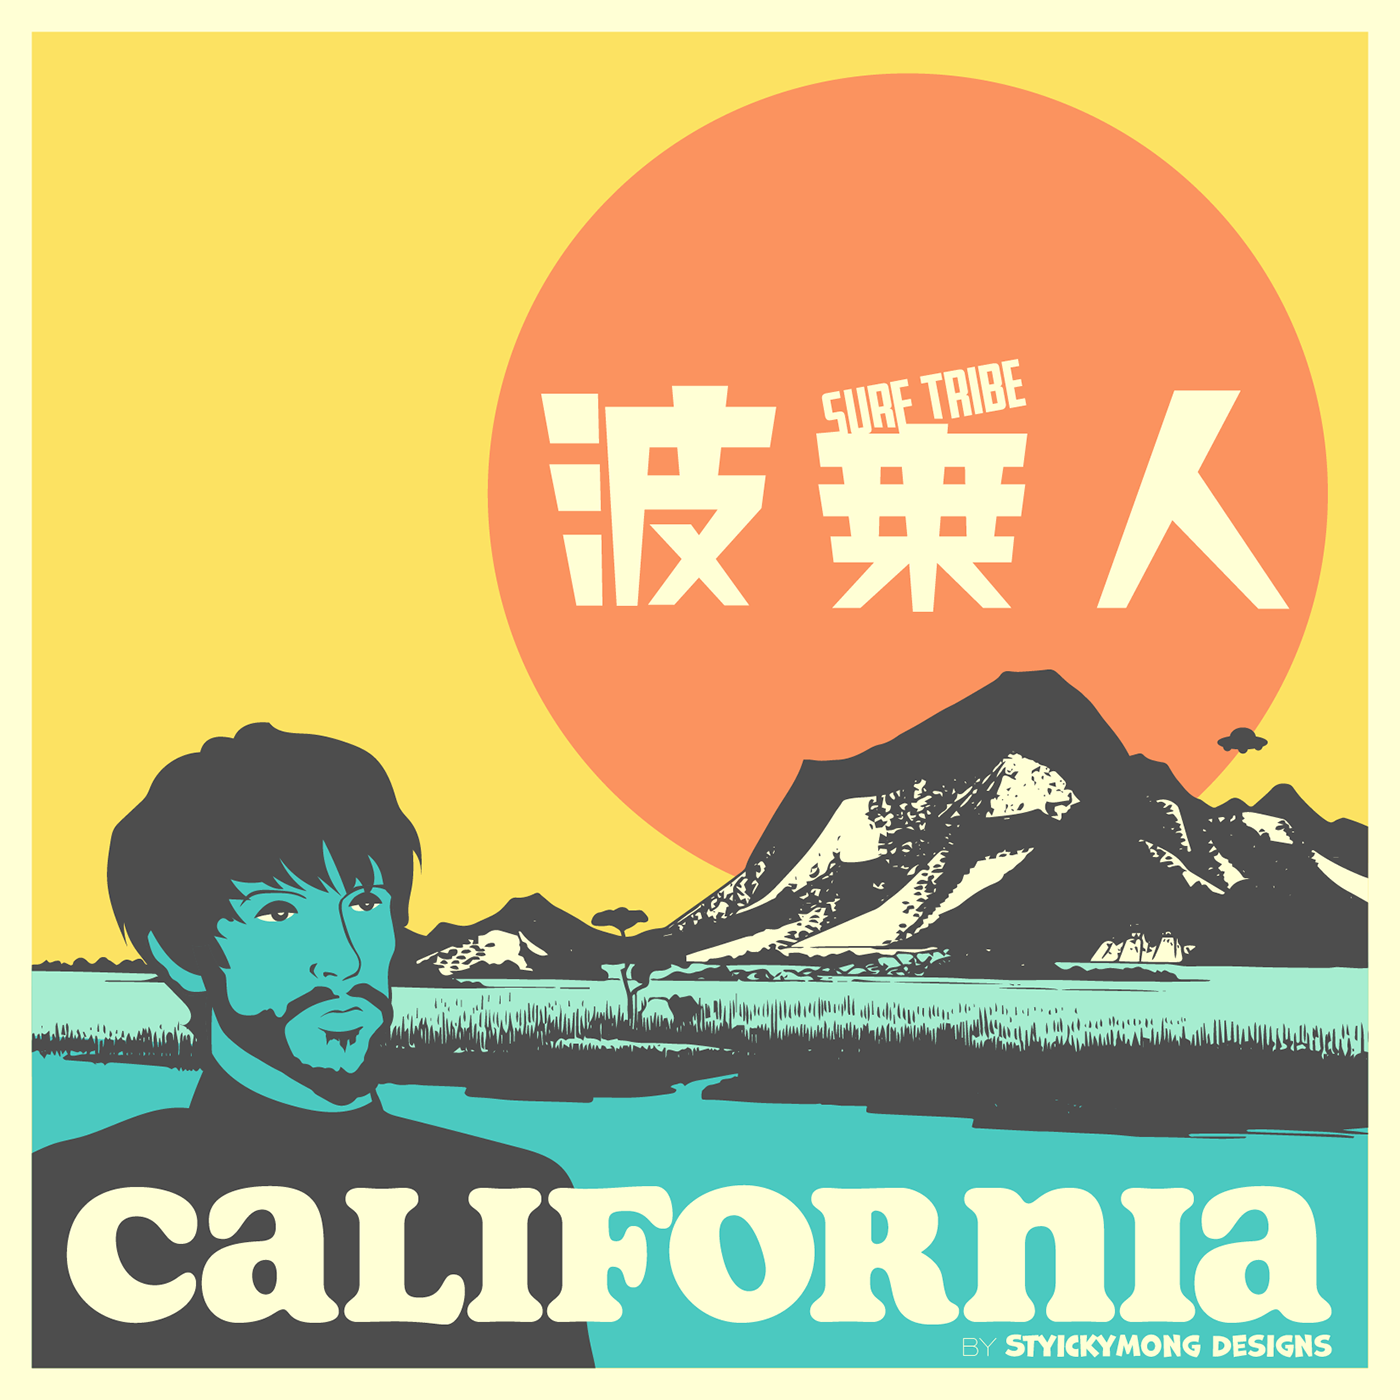 California Carlsbad edo graphic design  surfing tokyo